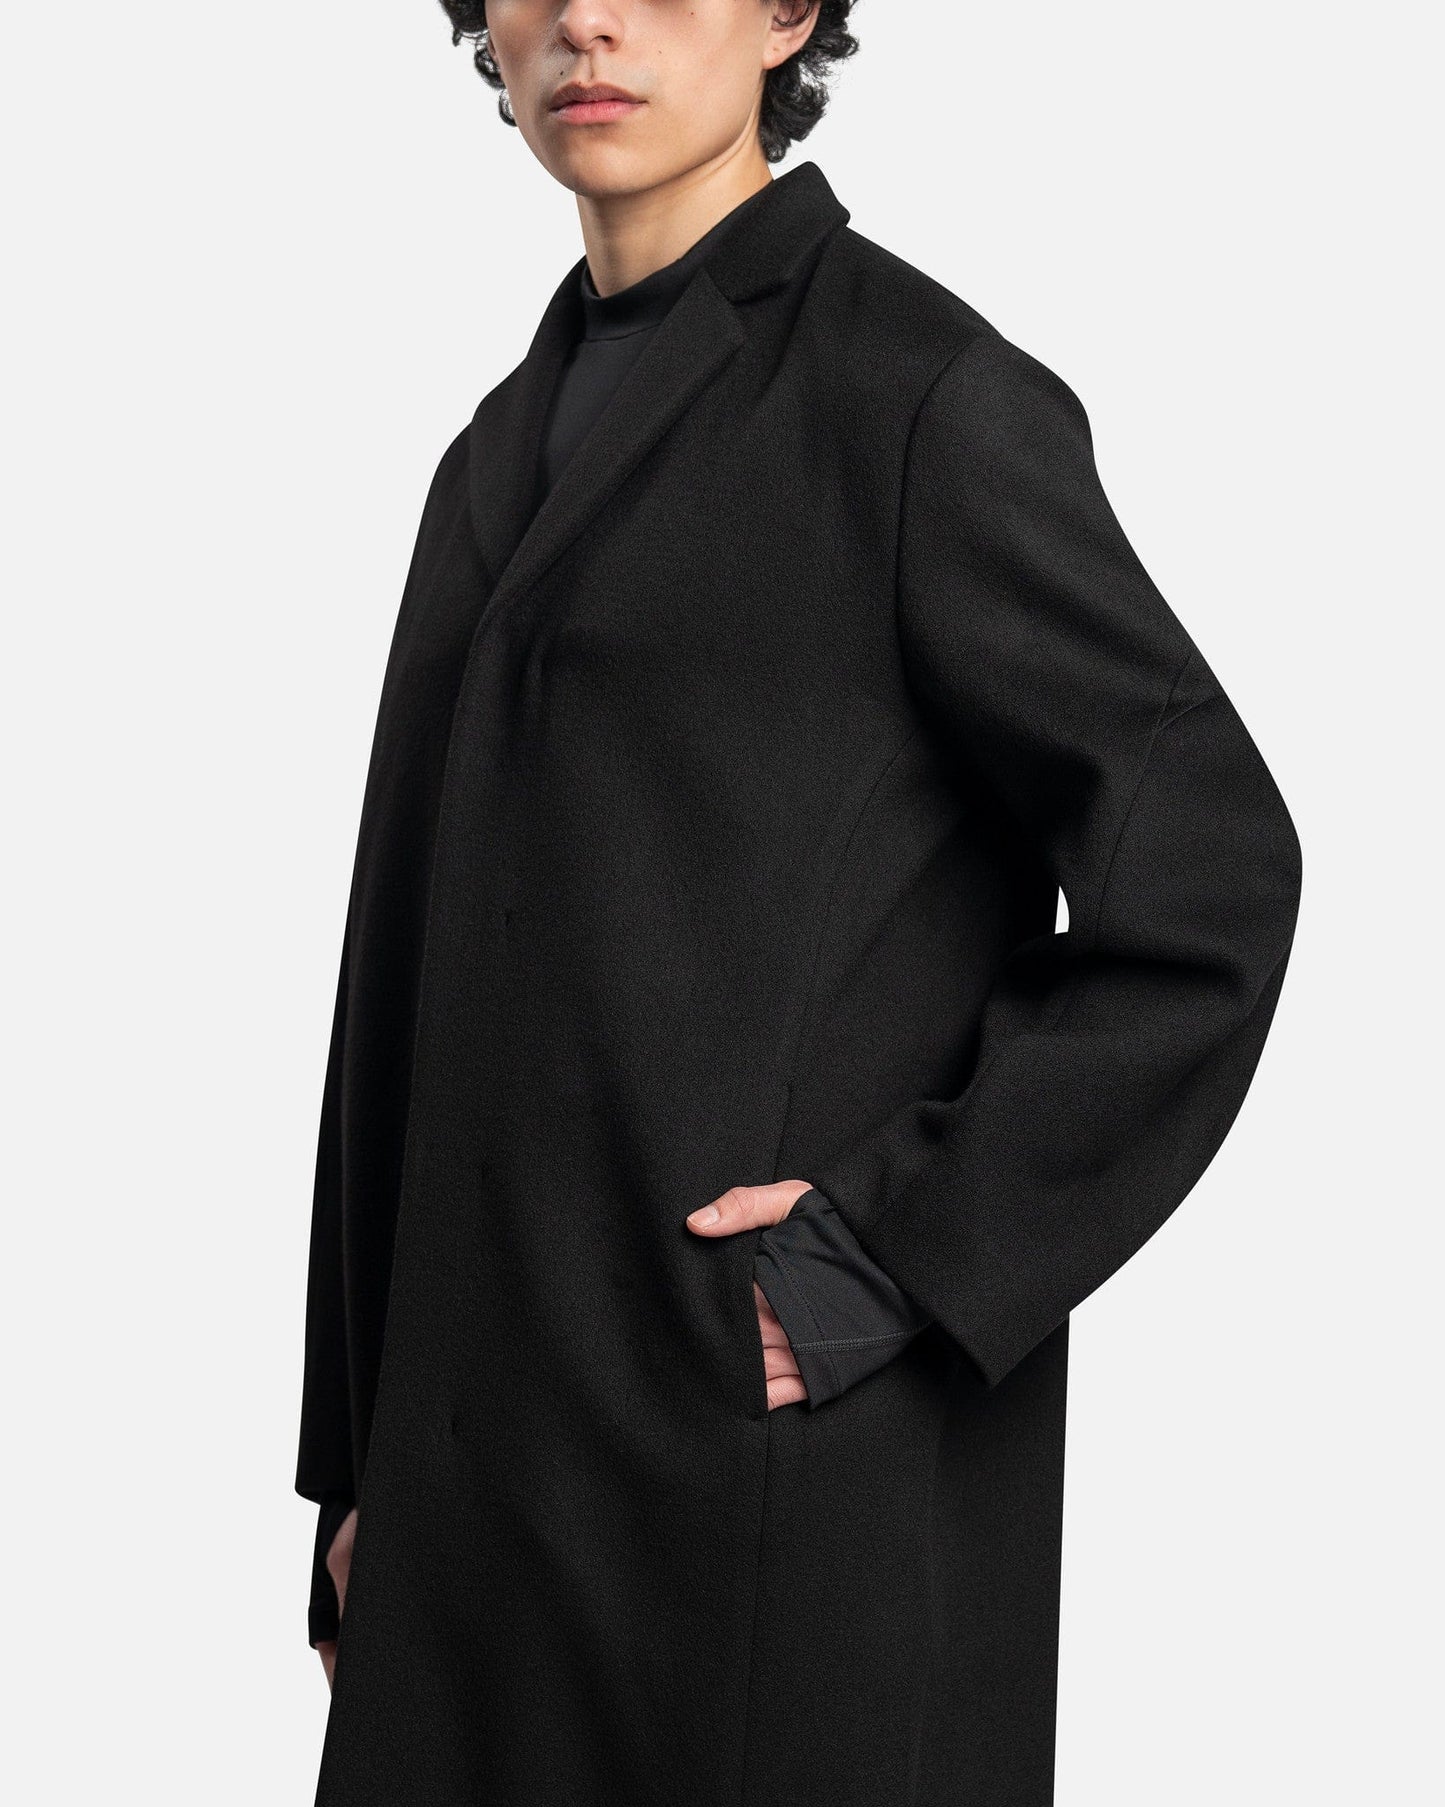 POST ARCHIVE FACTION (P.A.F) Men's Coat 5.0 Coat Right in Black